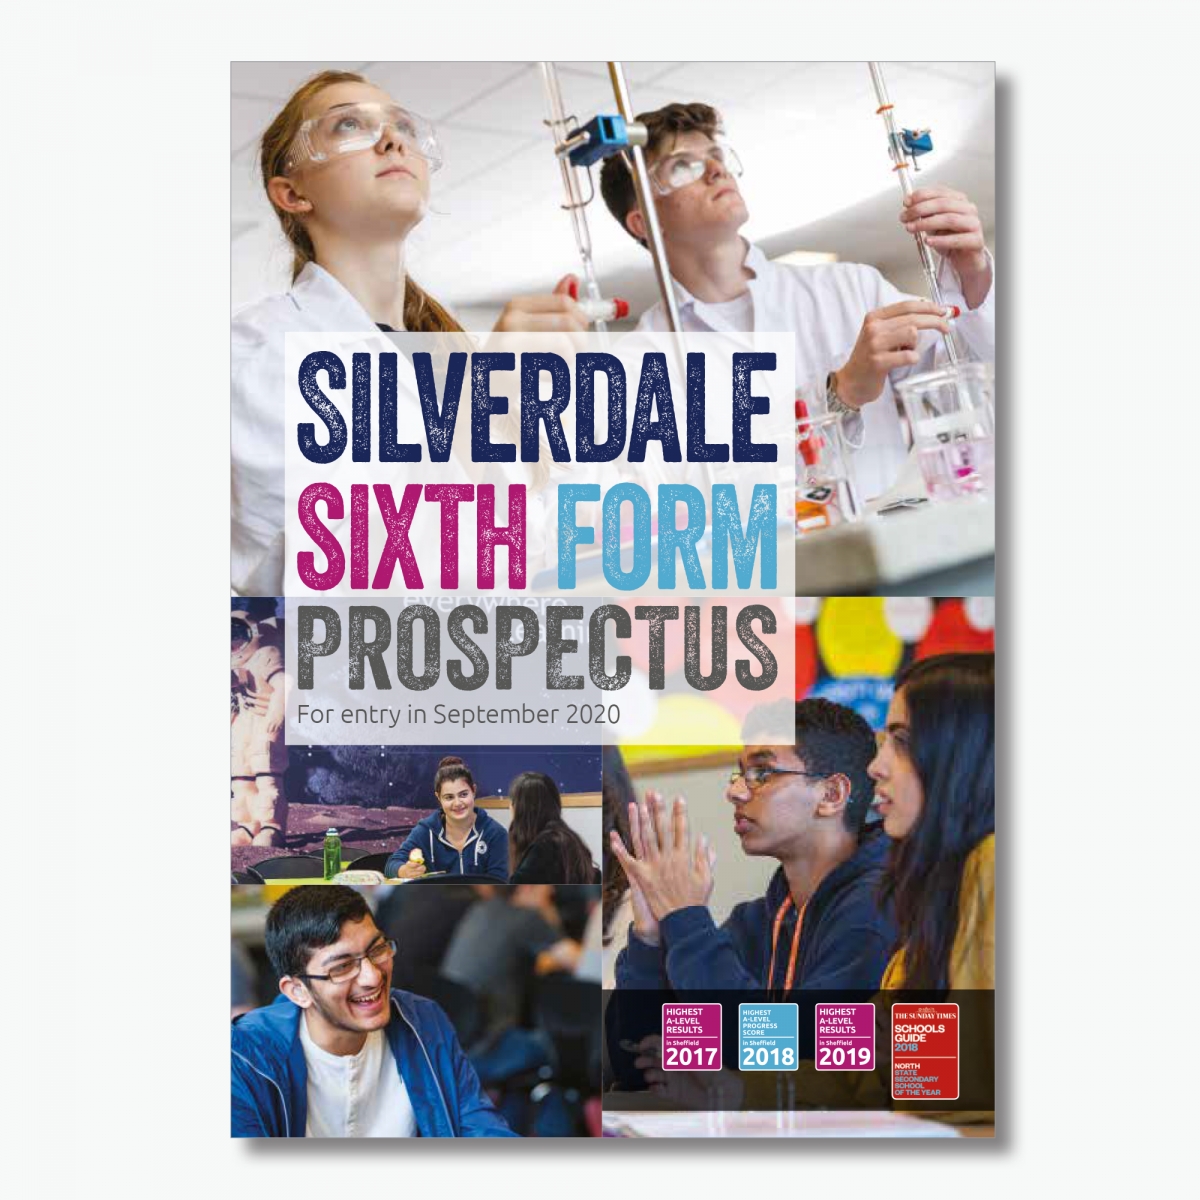 Silverdale Sixth Form